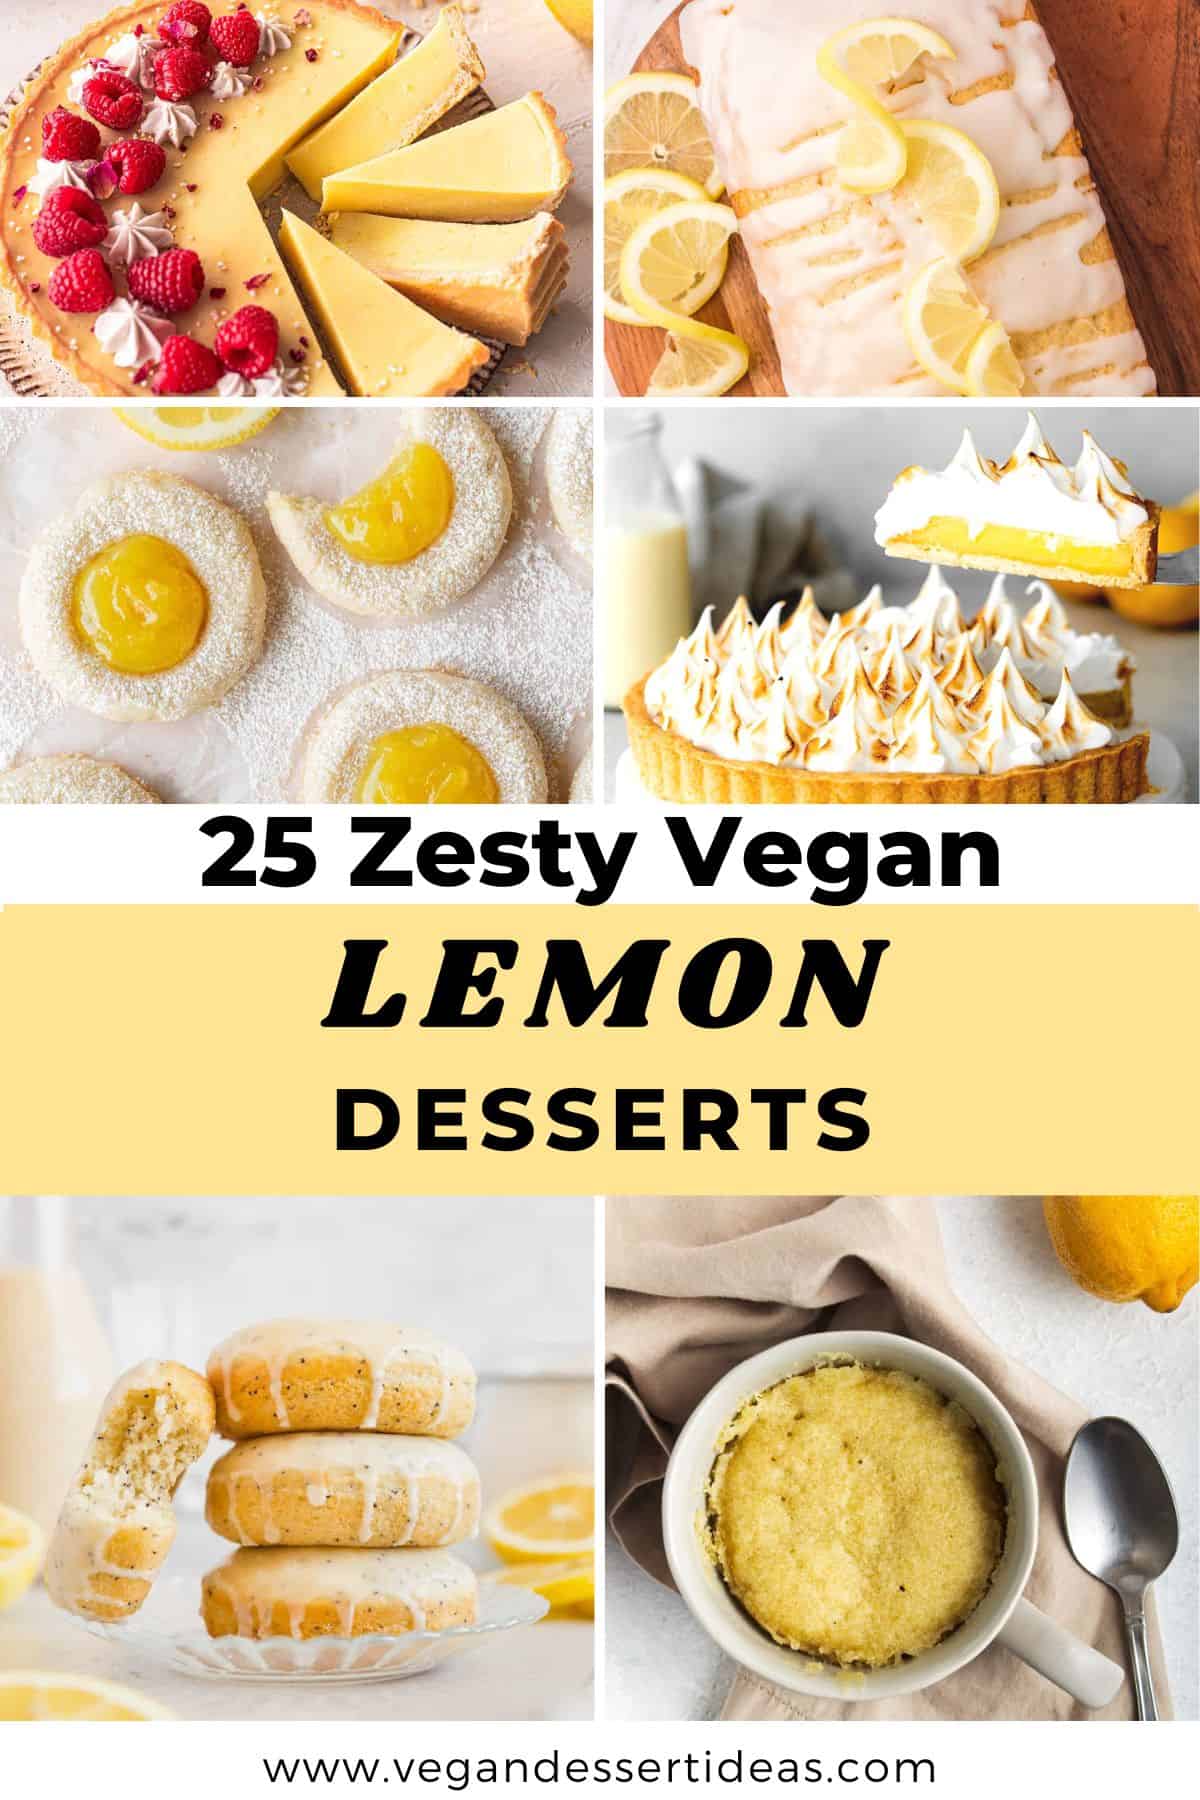 Lemon tart, cakes, cookies, pie and donuts " 25 Zesty Vegan Lemon Desserts".